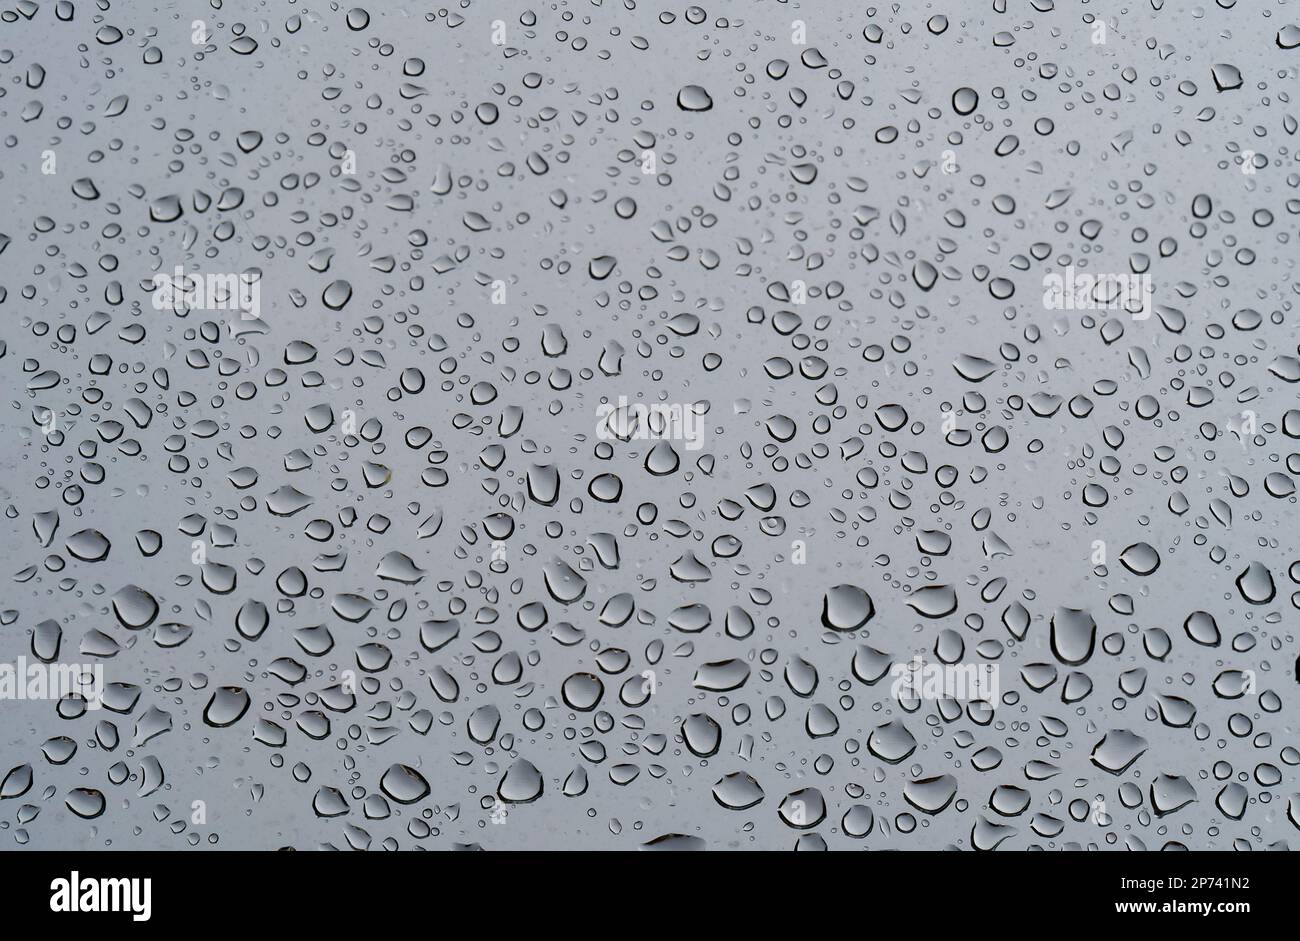 rain drops on a grey background. Stock Photo